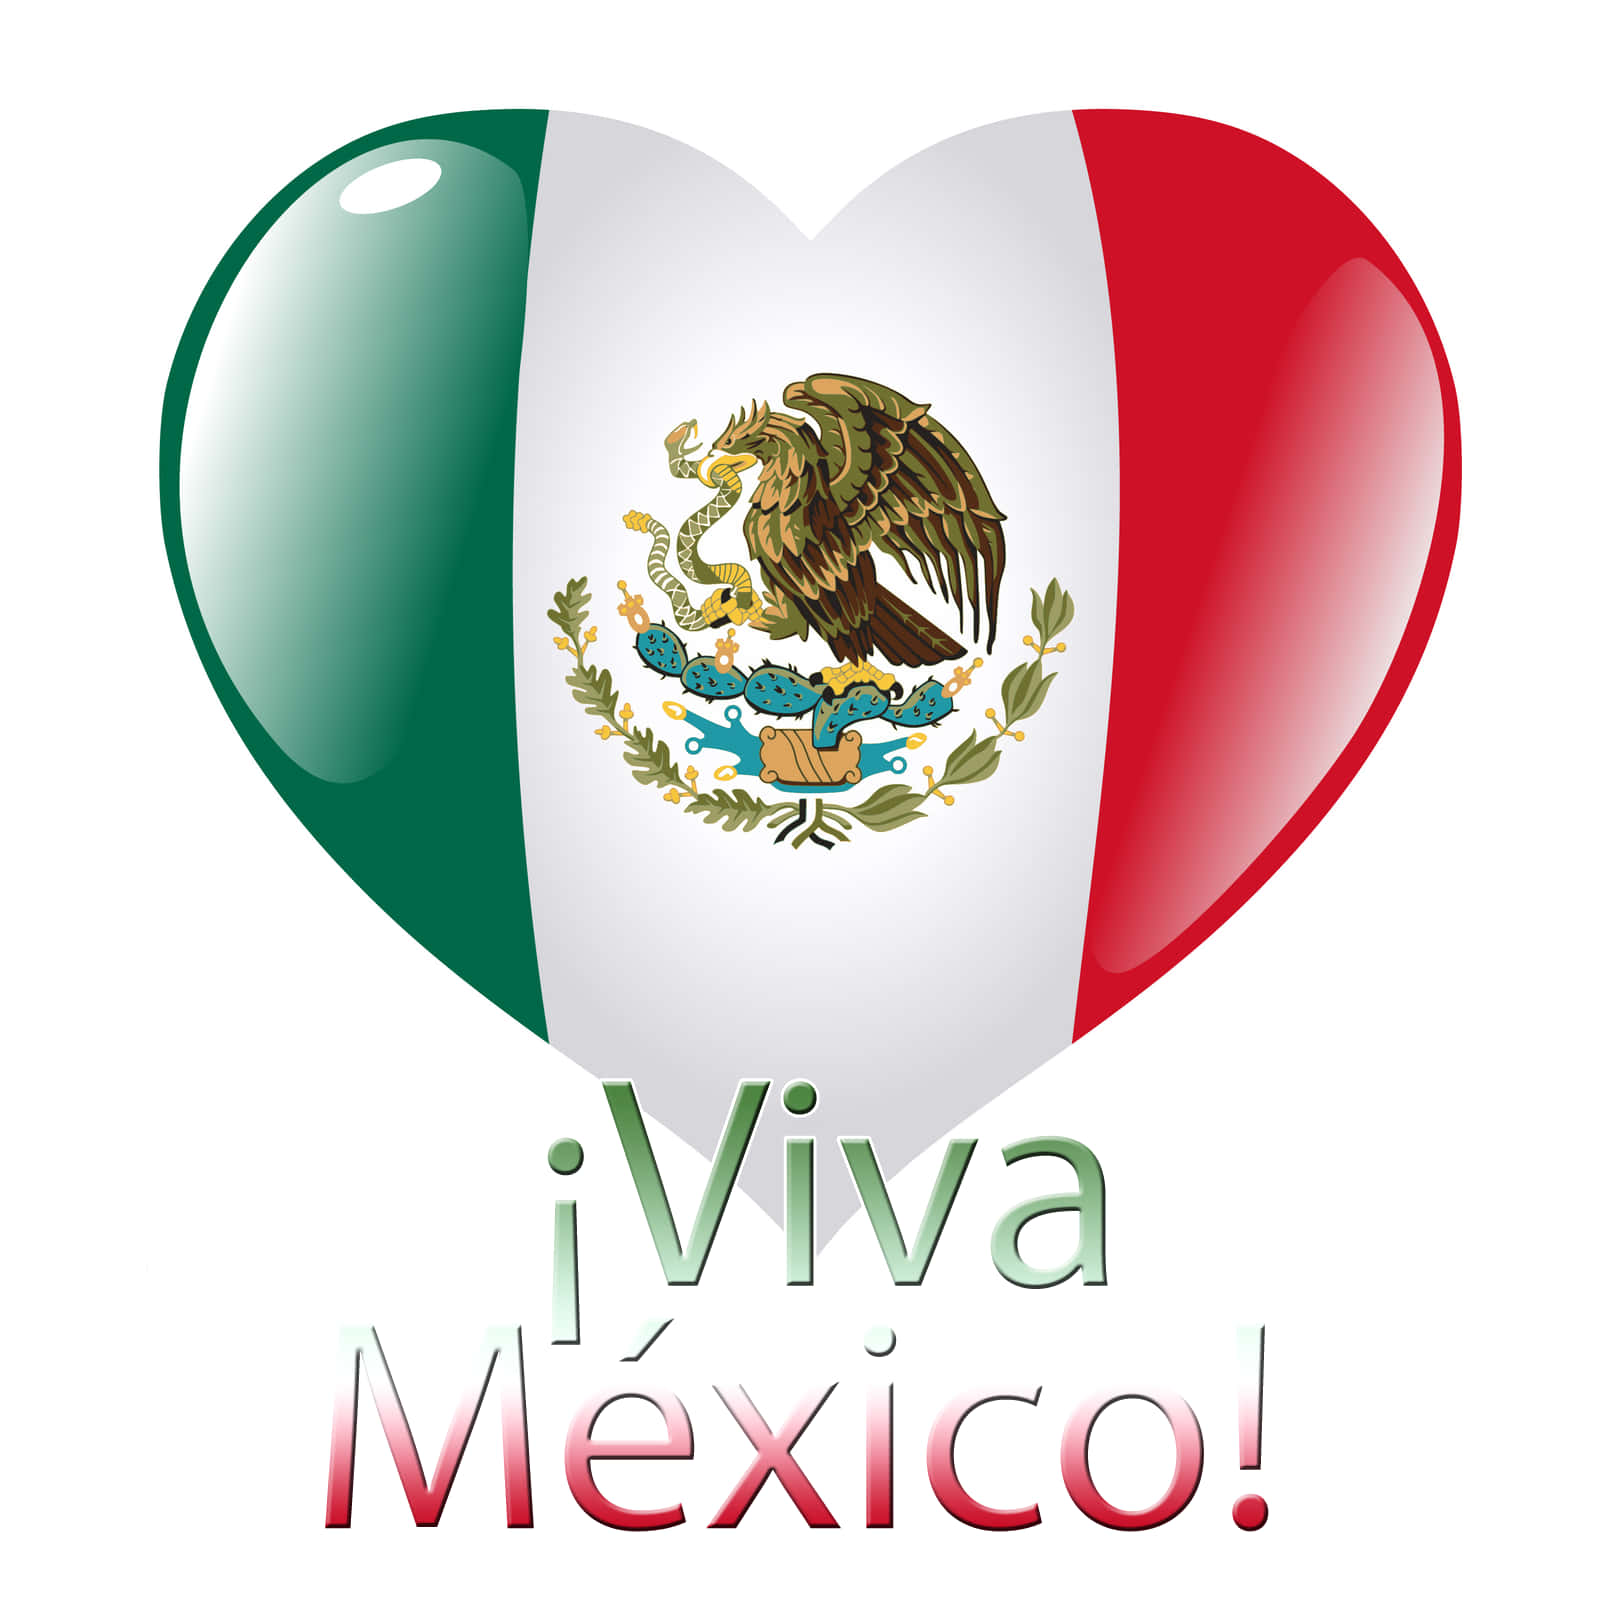 Viva La Belleza De México! (long Live The Beauty Of Mexico!)